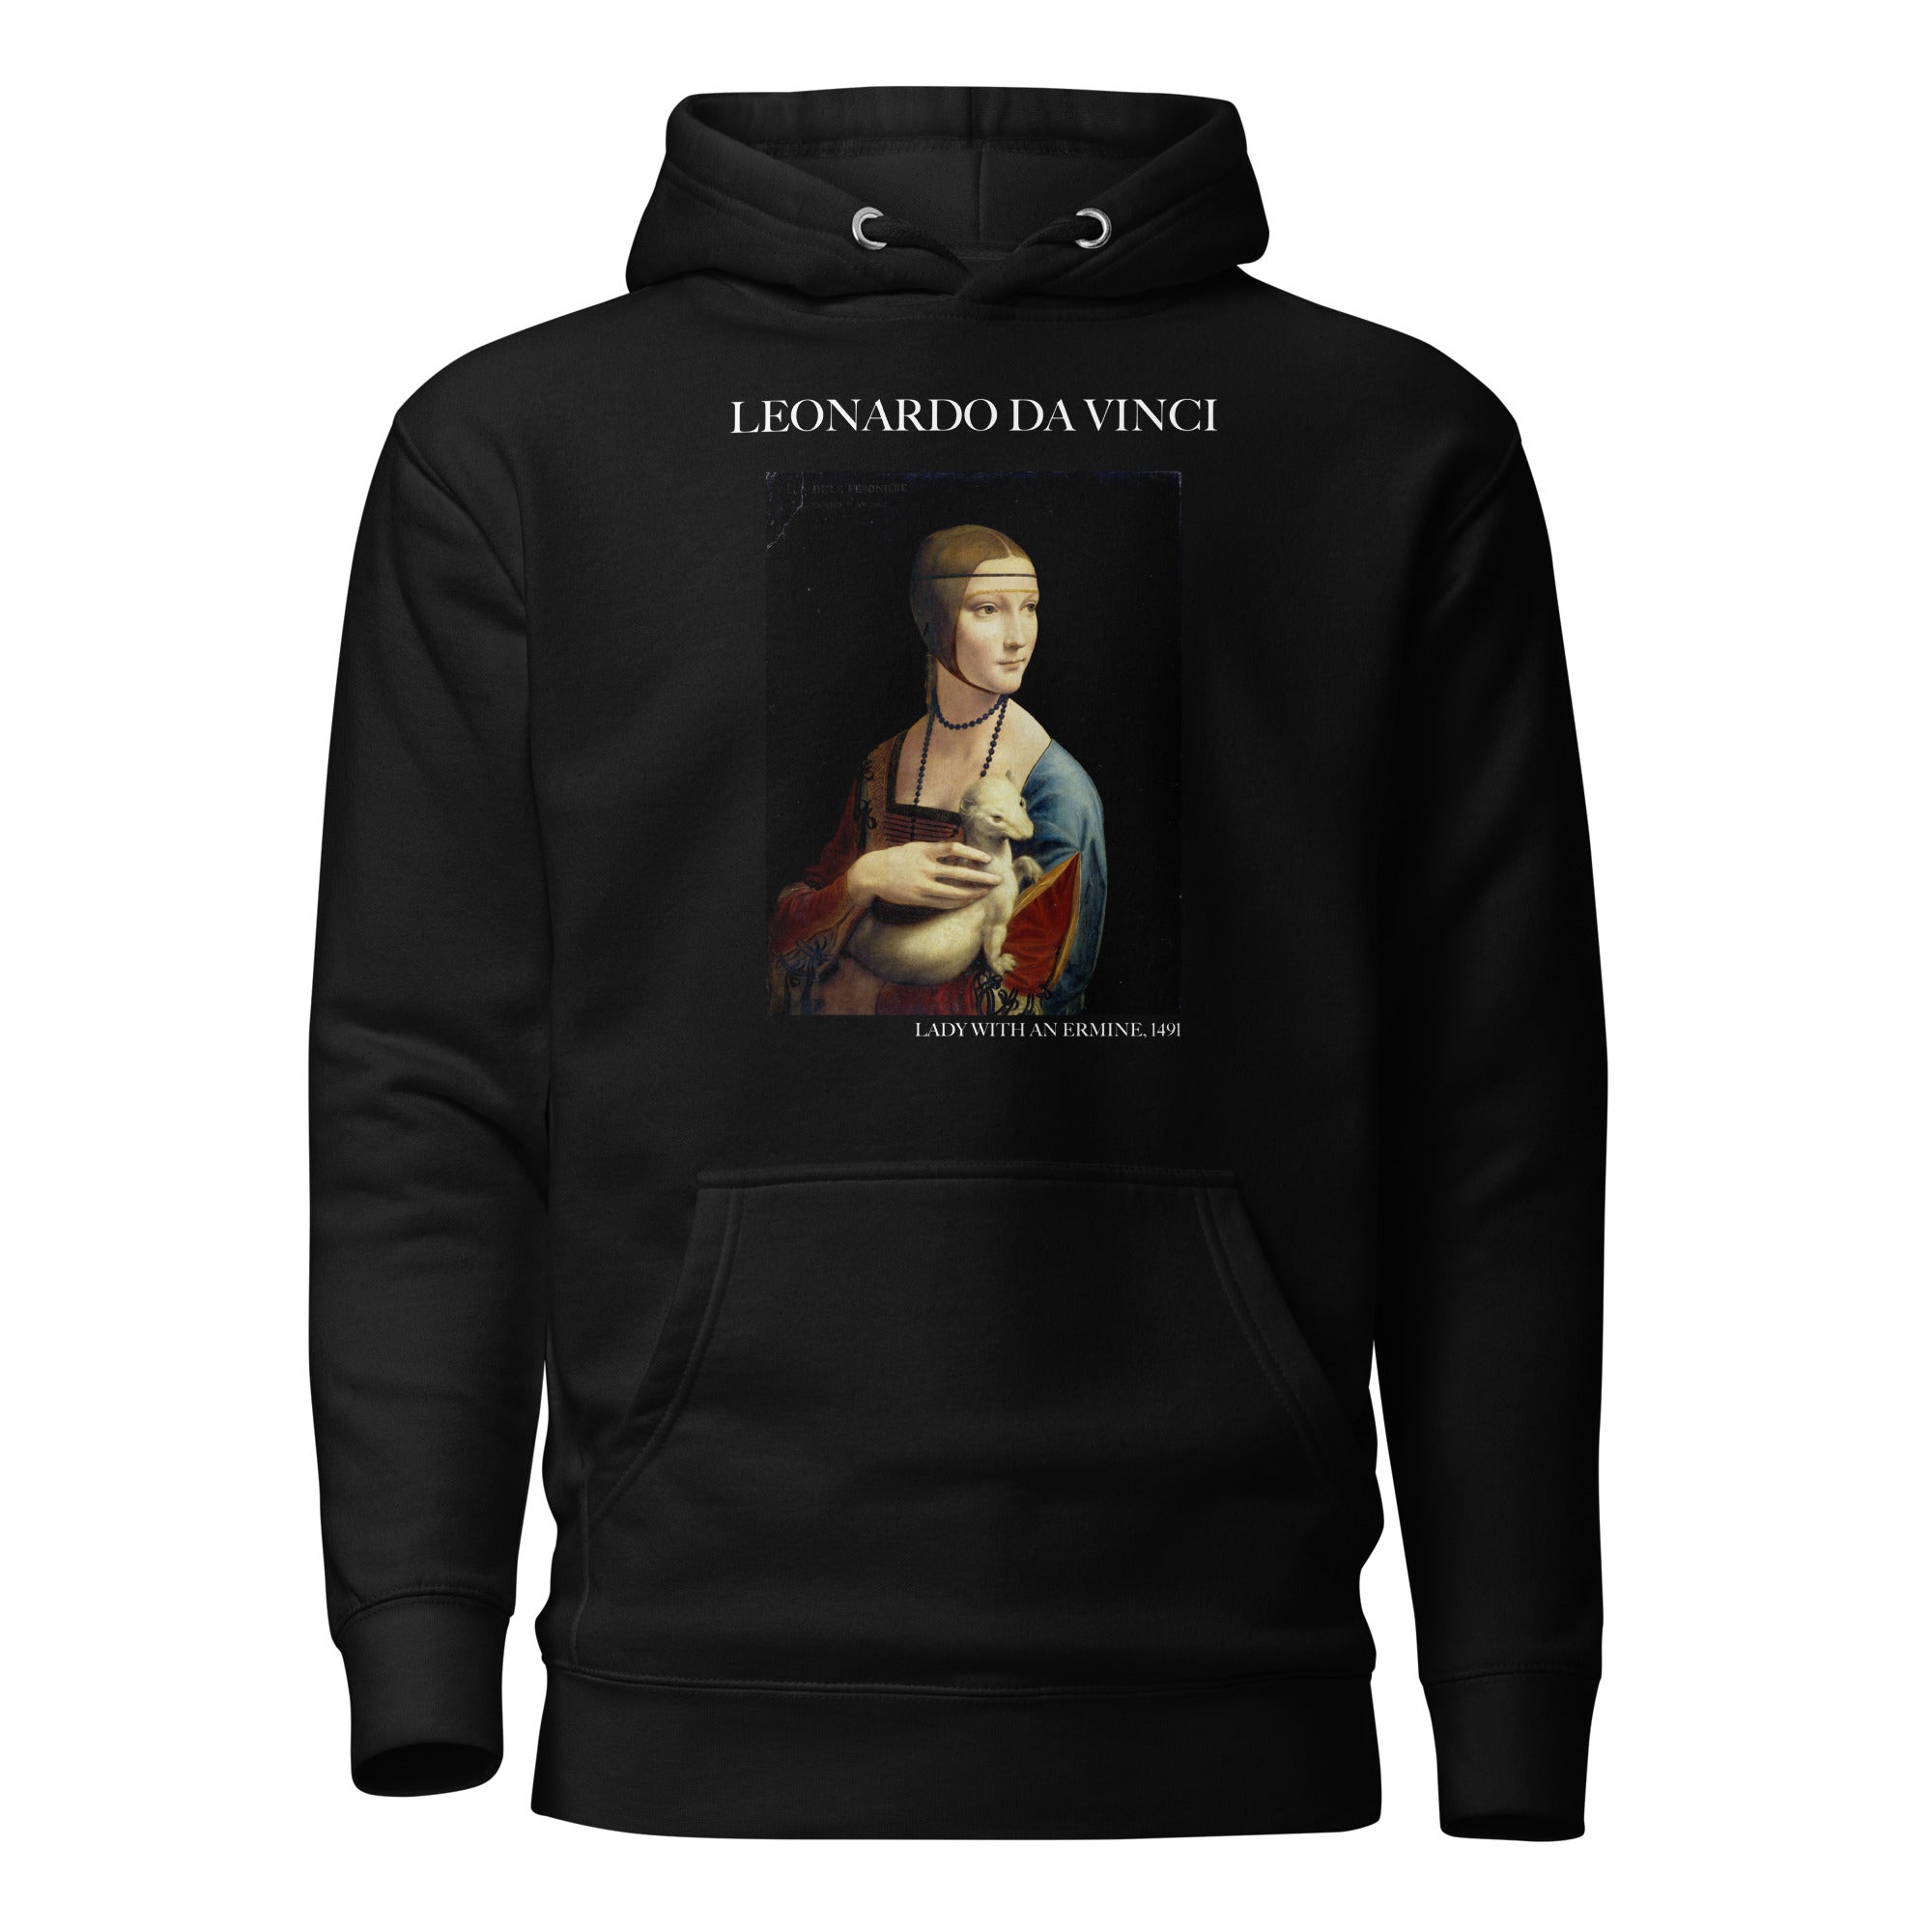 Leonardo da Vinci 'Lady with an Ermine' Famous Painting Hoodie | Unisex Premium Art Hoodie